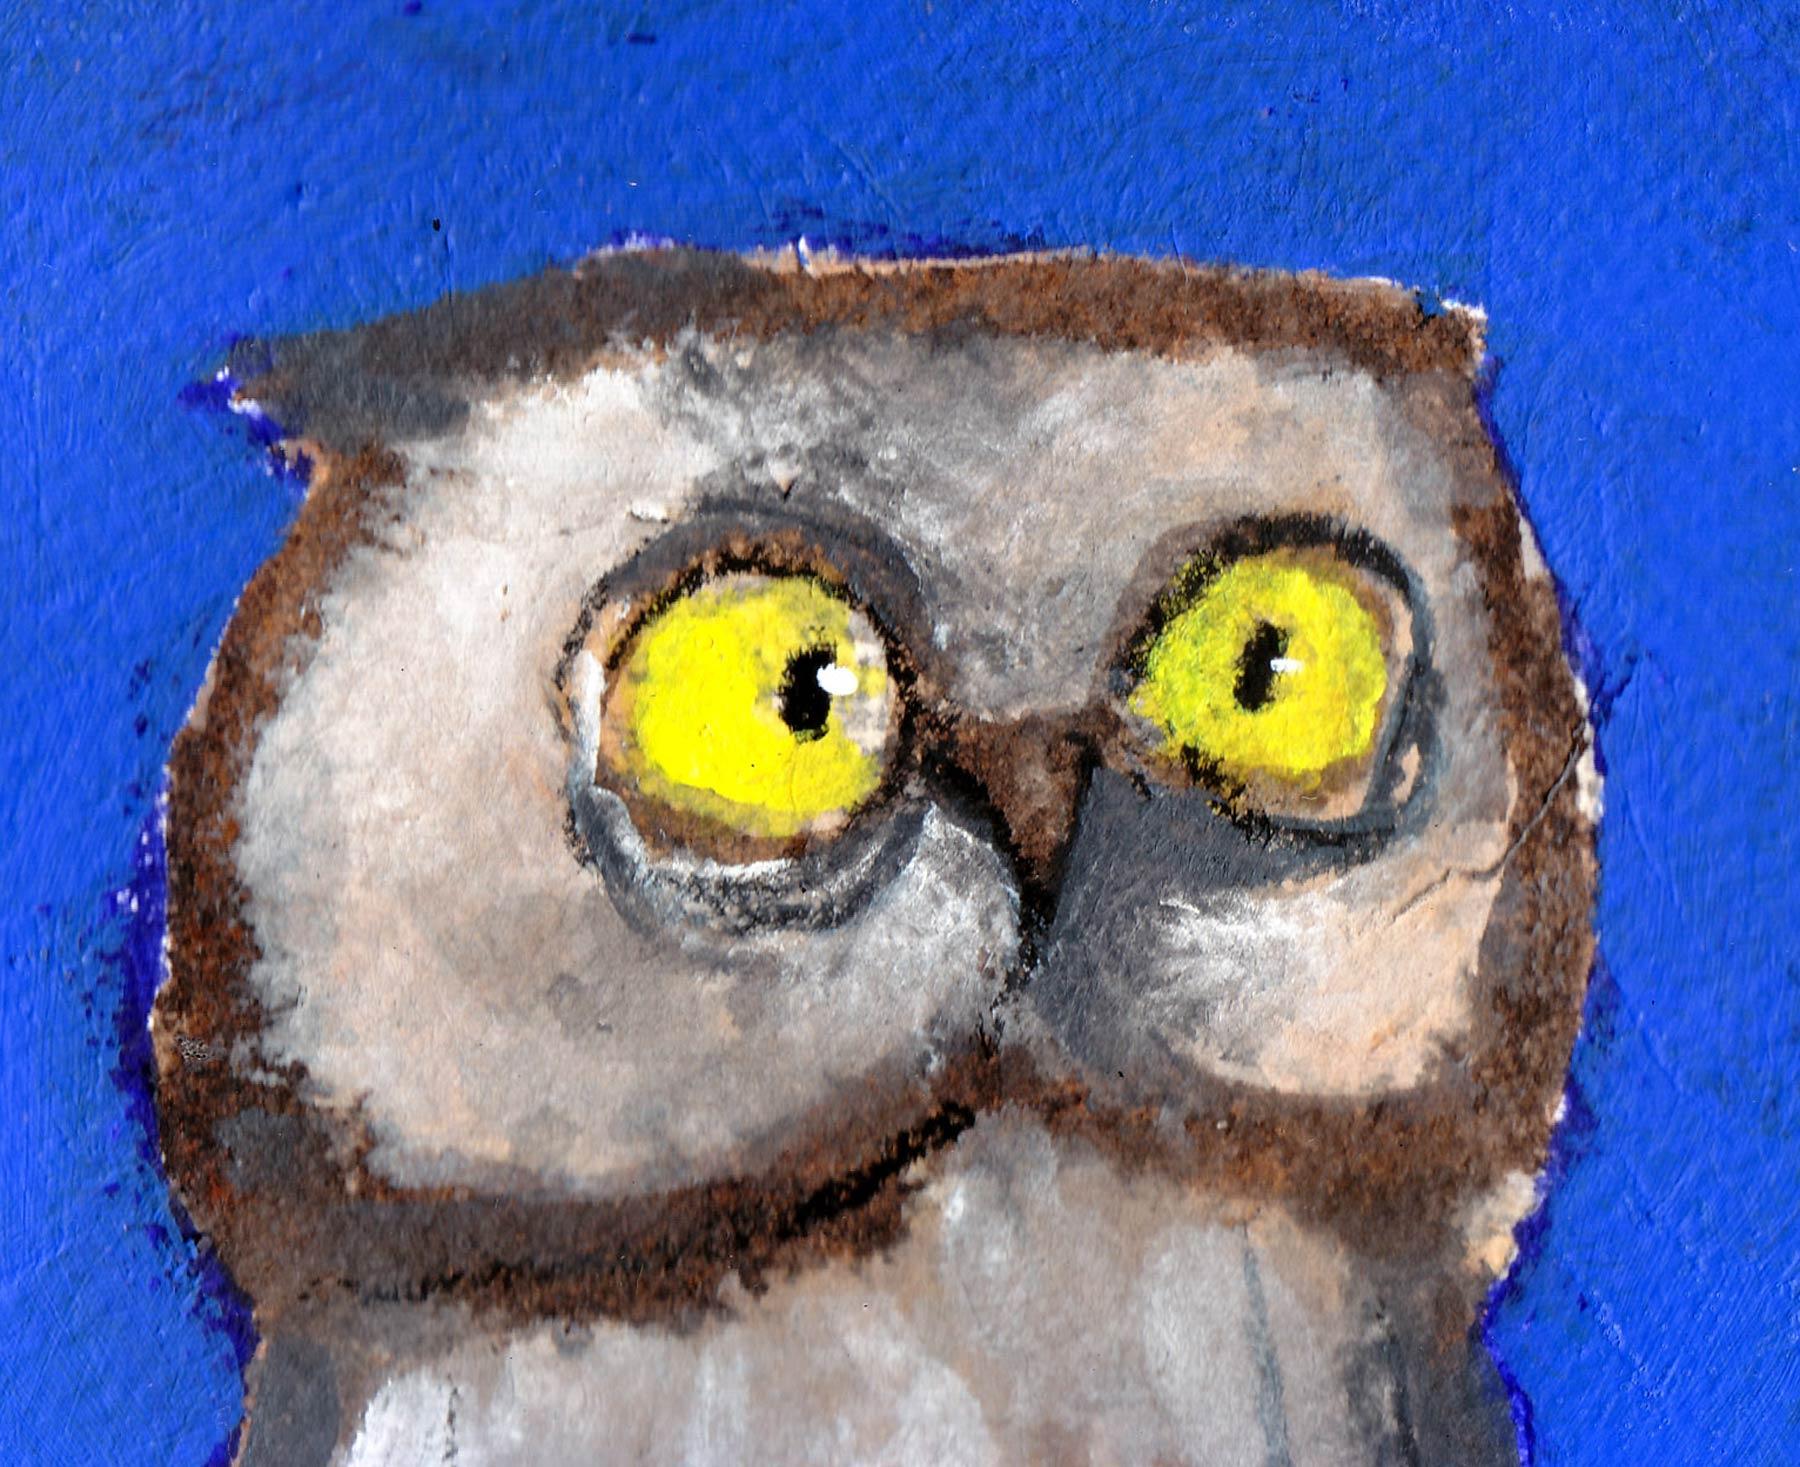 The Owl, Goddess Laxmi's Consort, Yellow Eyeballs, Acrylic, Charcoal 